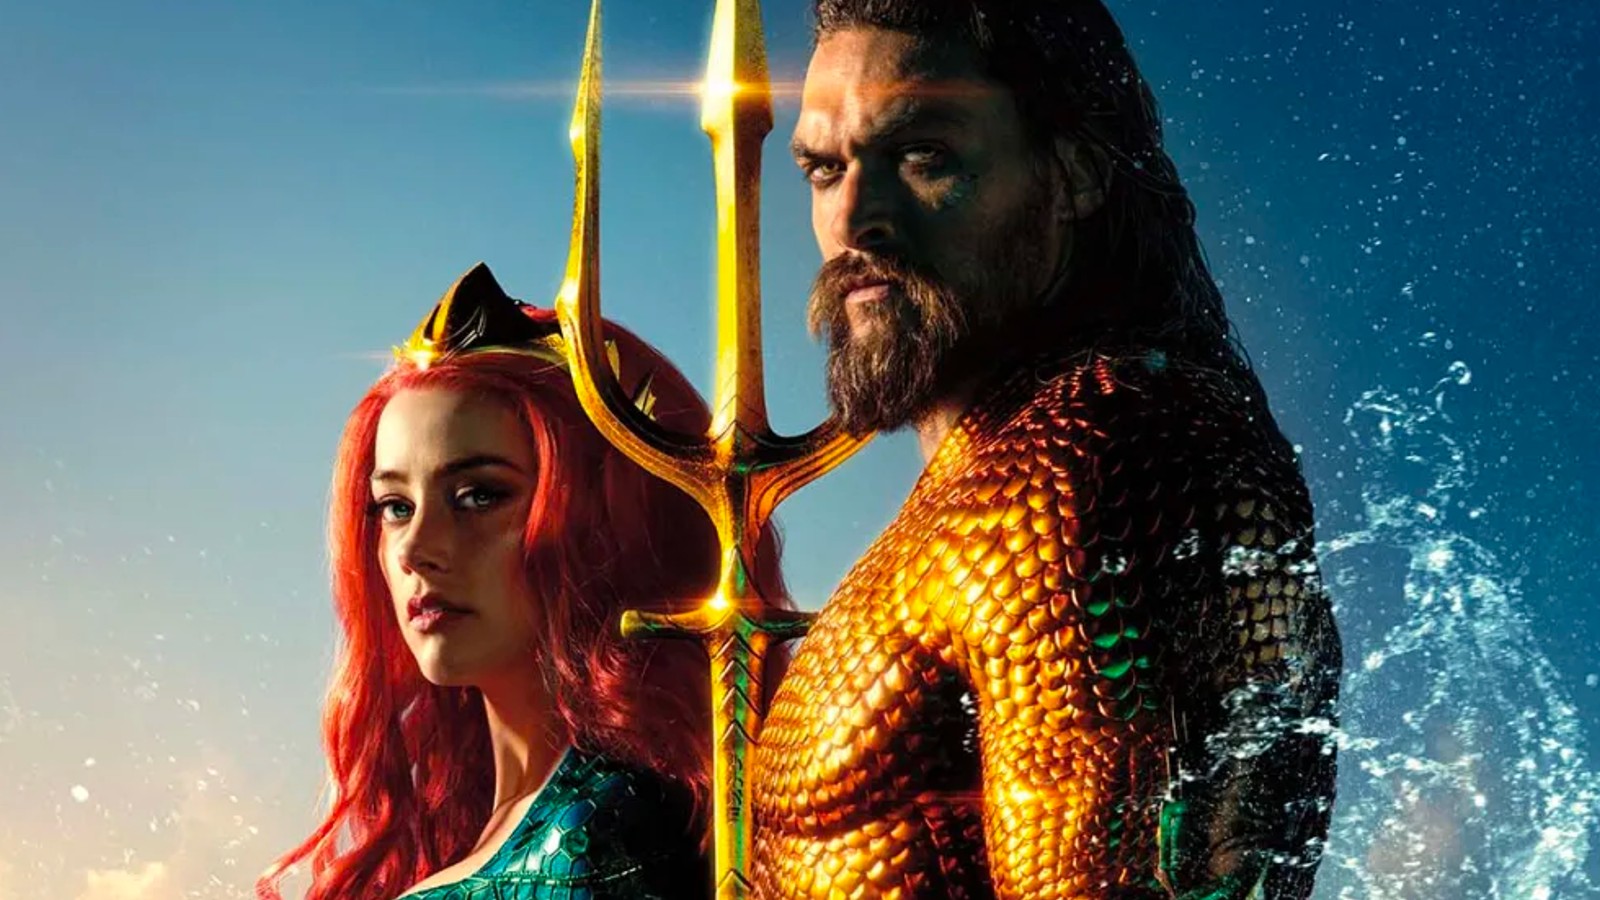 Jason Momoa Says Aquaman's Future Not Looking Good in New DC Universe